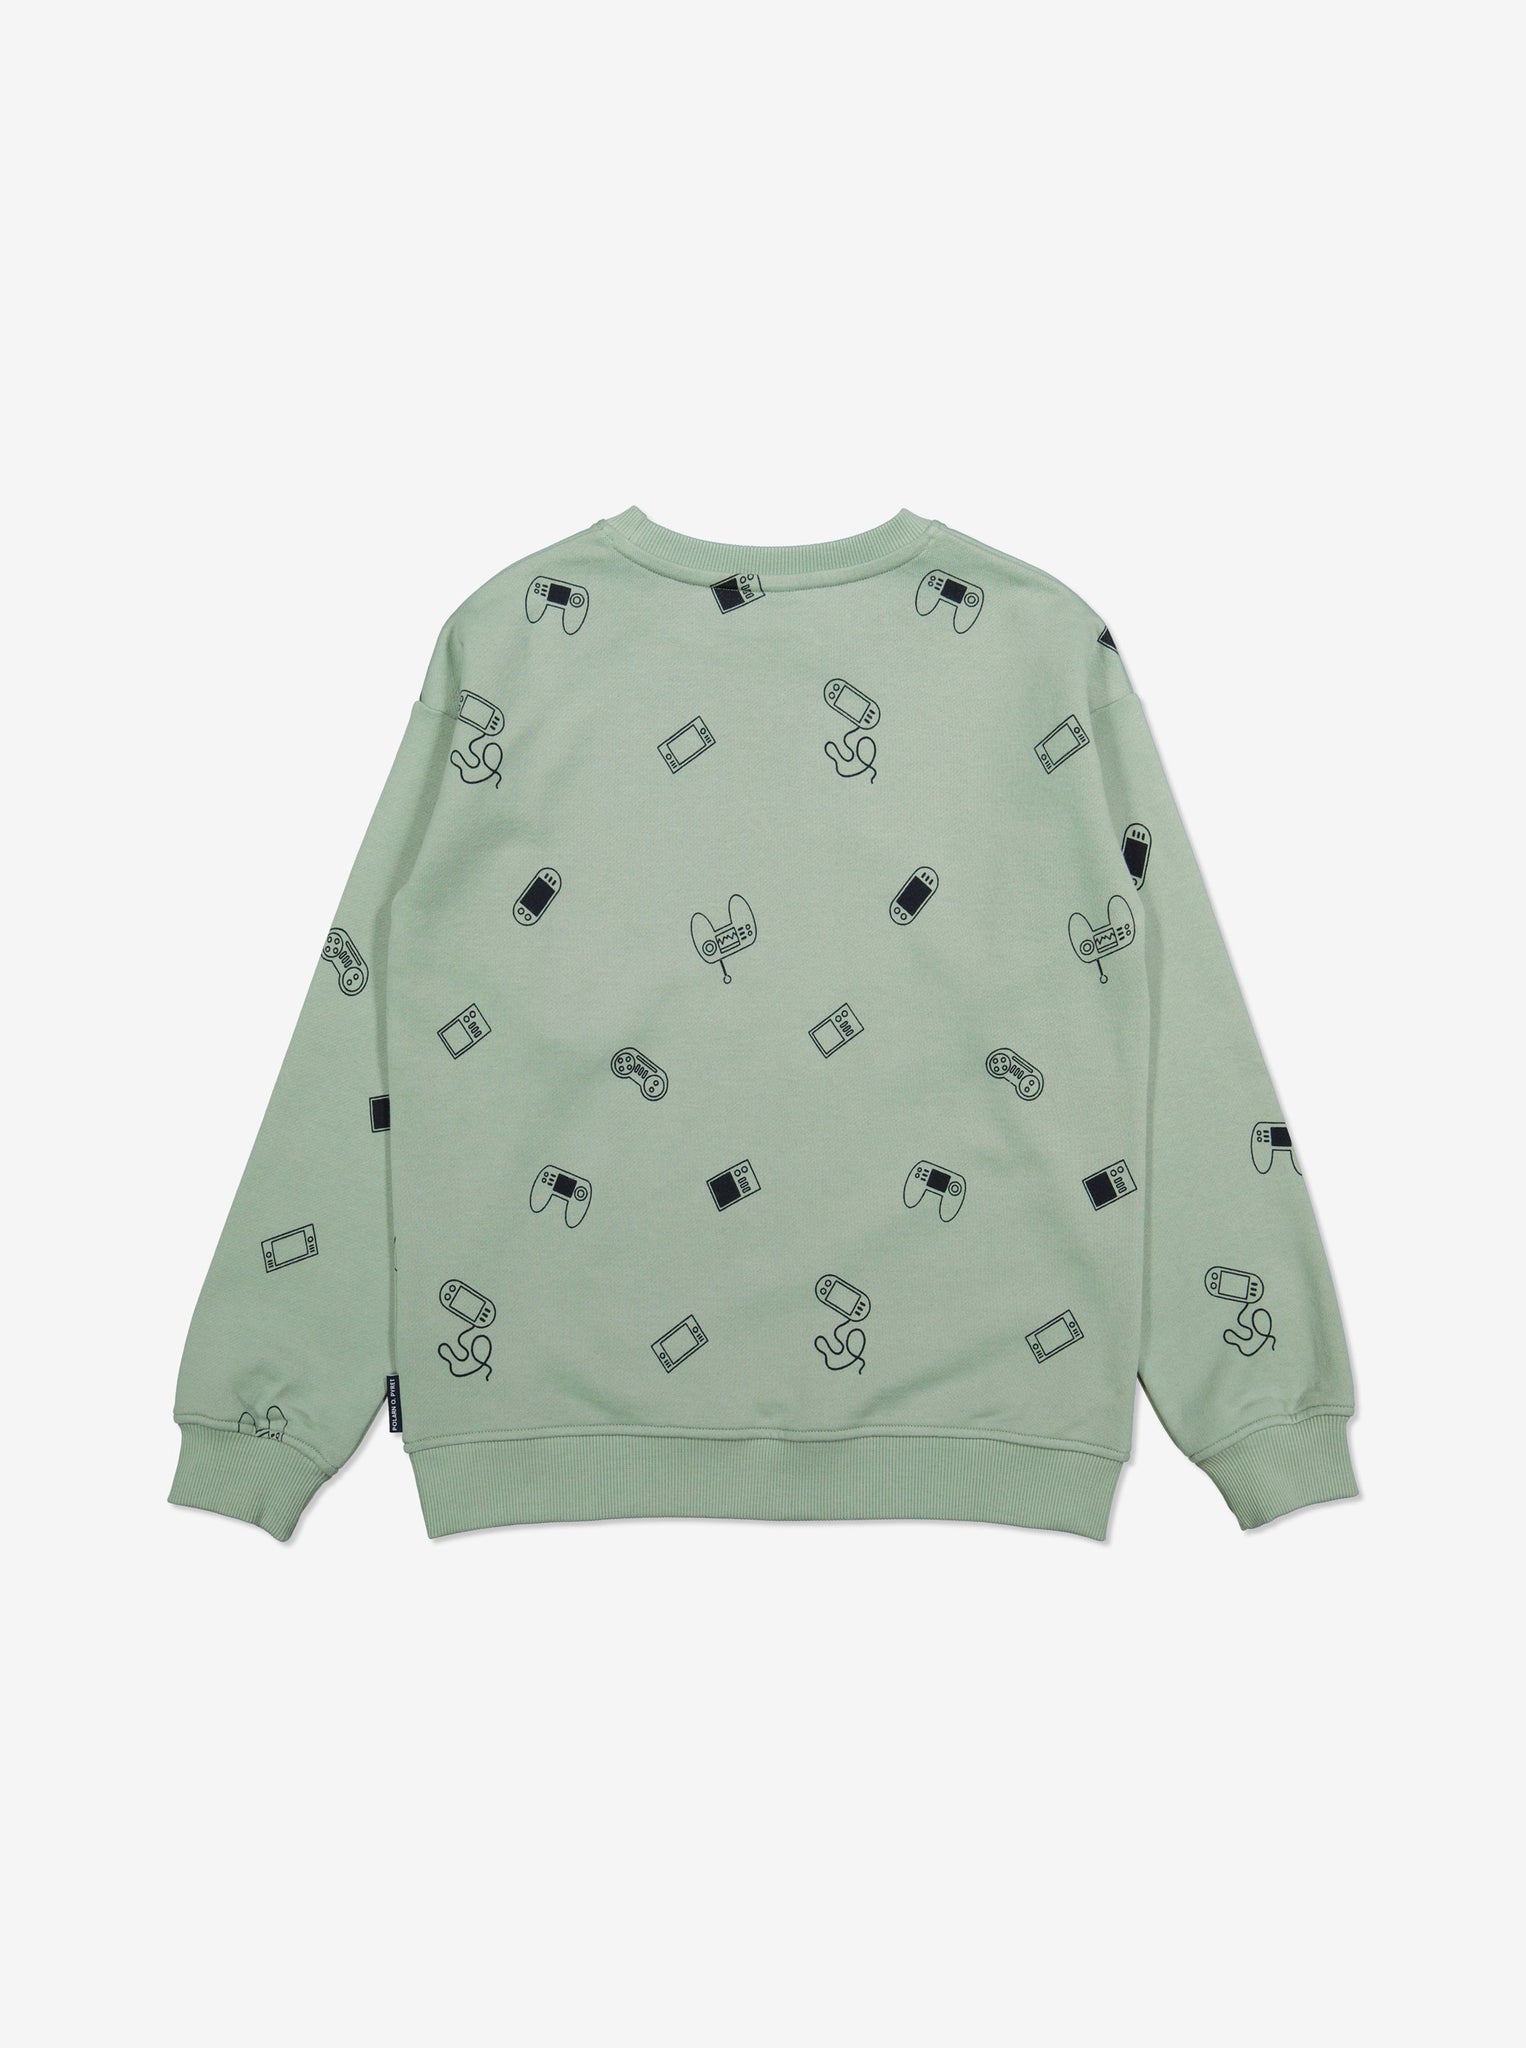  Organic Green Kids Sweatshirt from Polarn O. Pyret Kidswear. Made with 100% organic cotton.